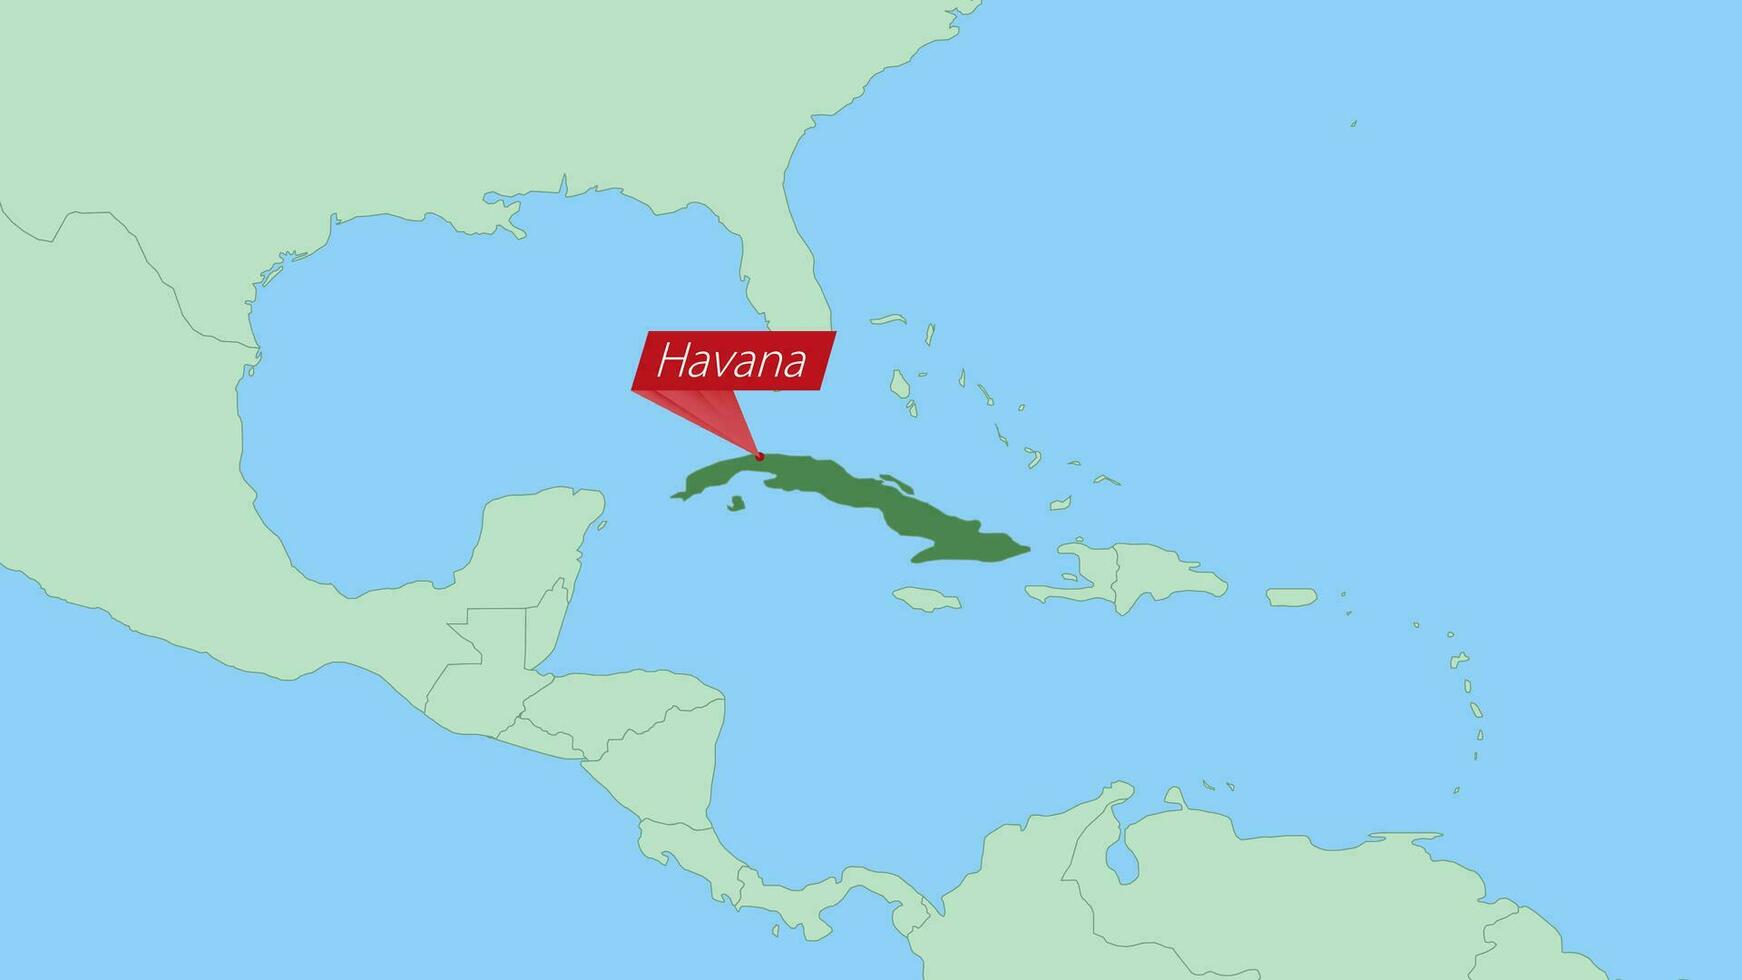 carte de Cuba avec épingle de pays capital. vecteur